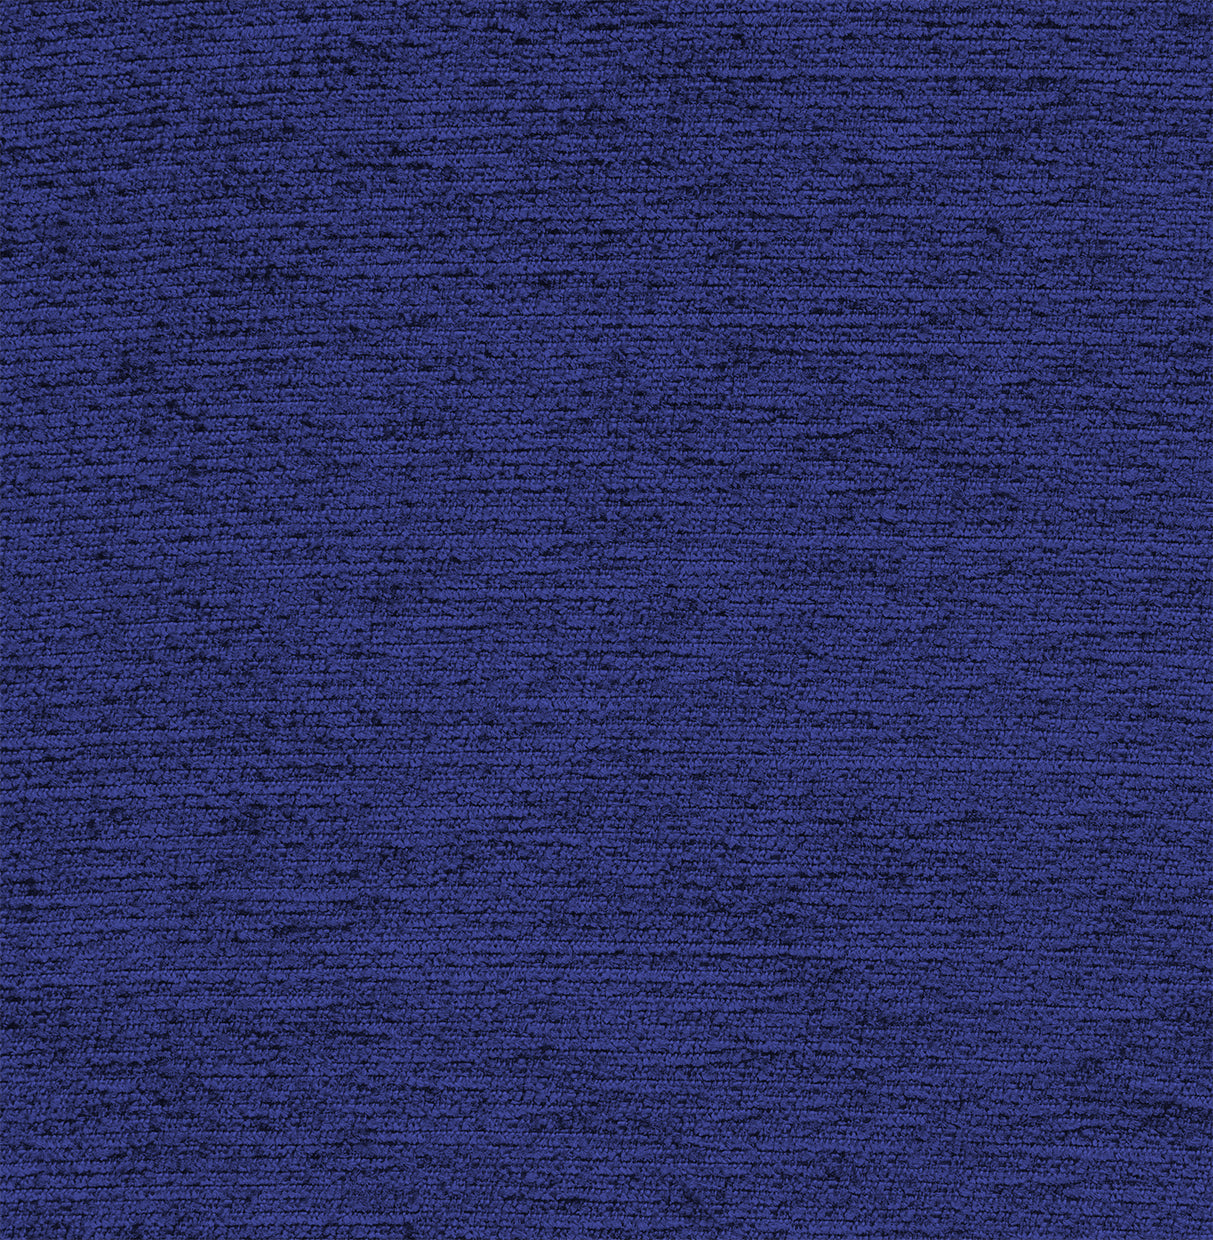 Plush - Navy Blue